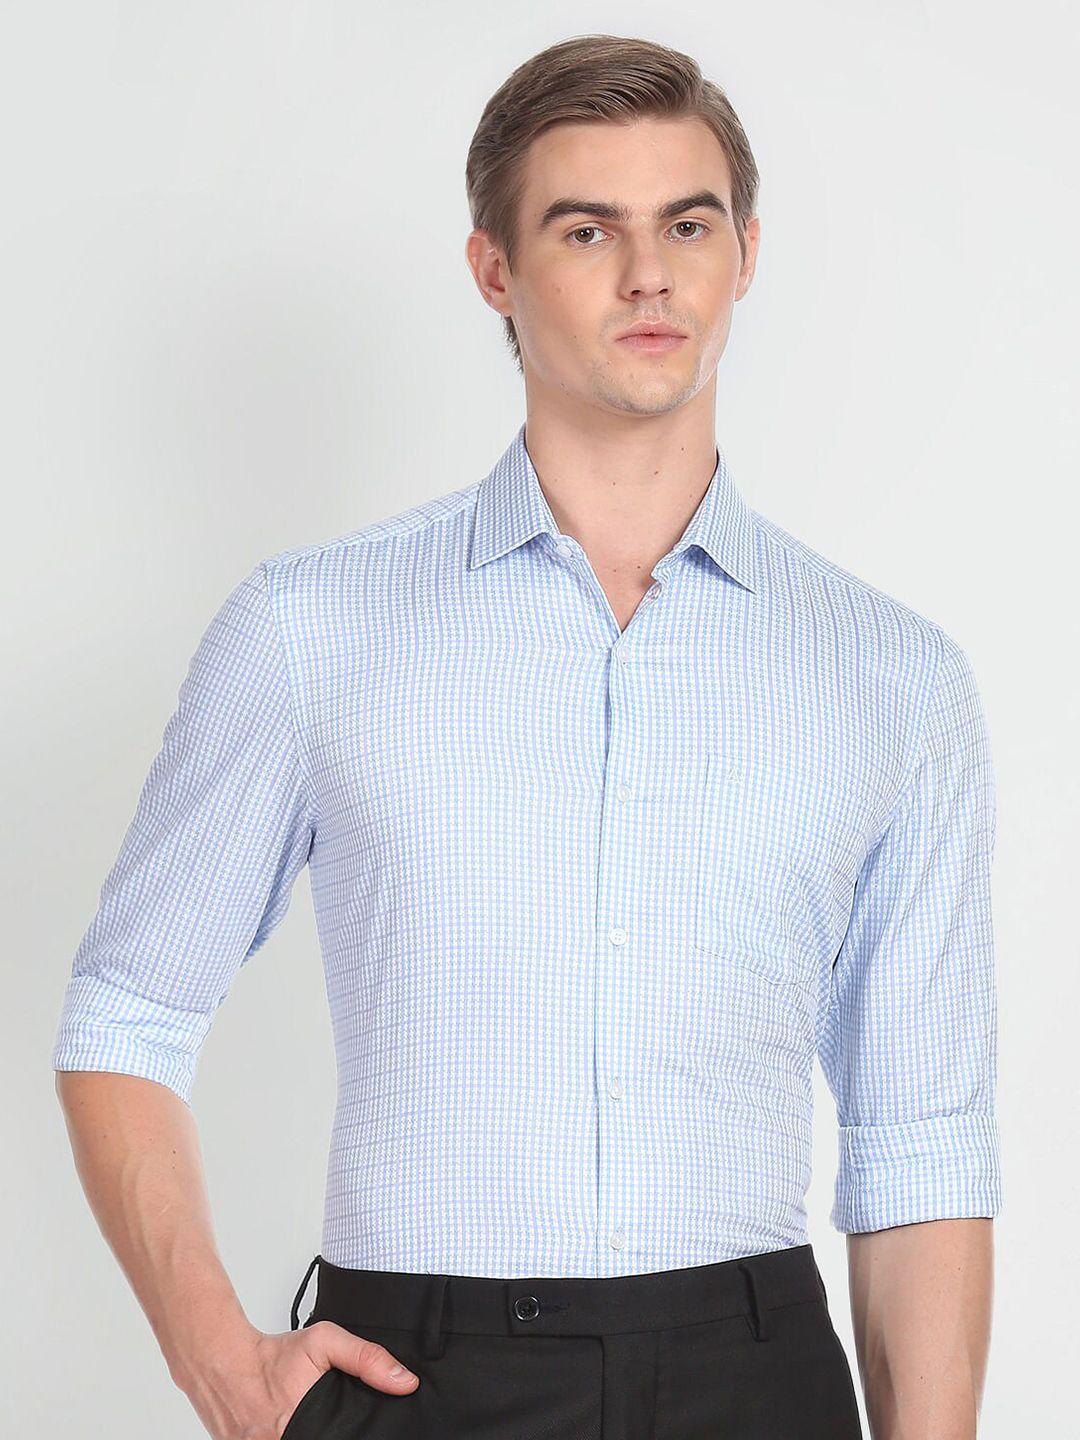 arrow micro checks opaque pure cotton formal shirt